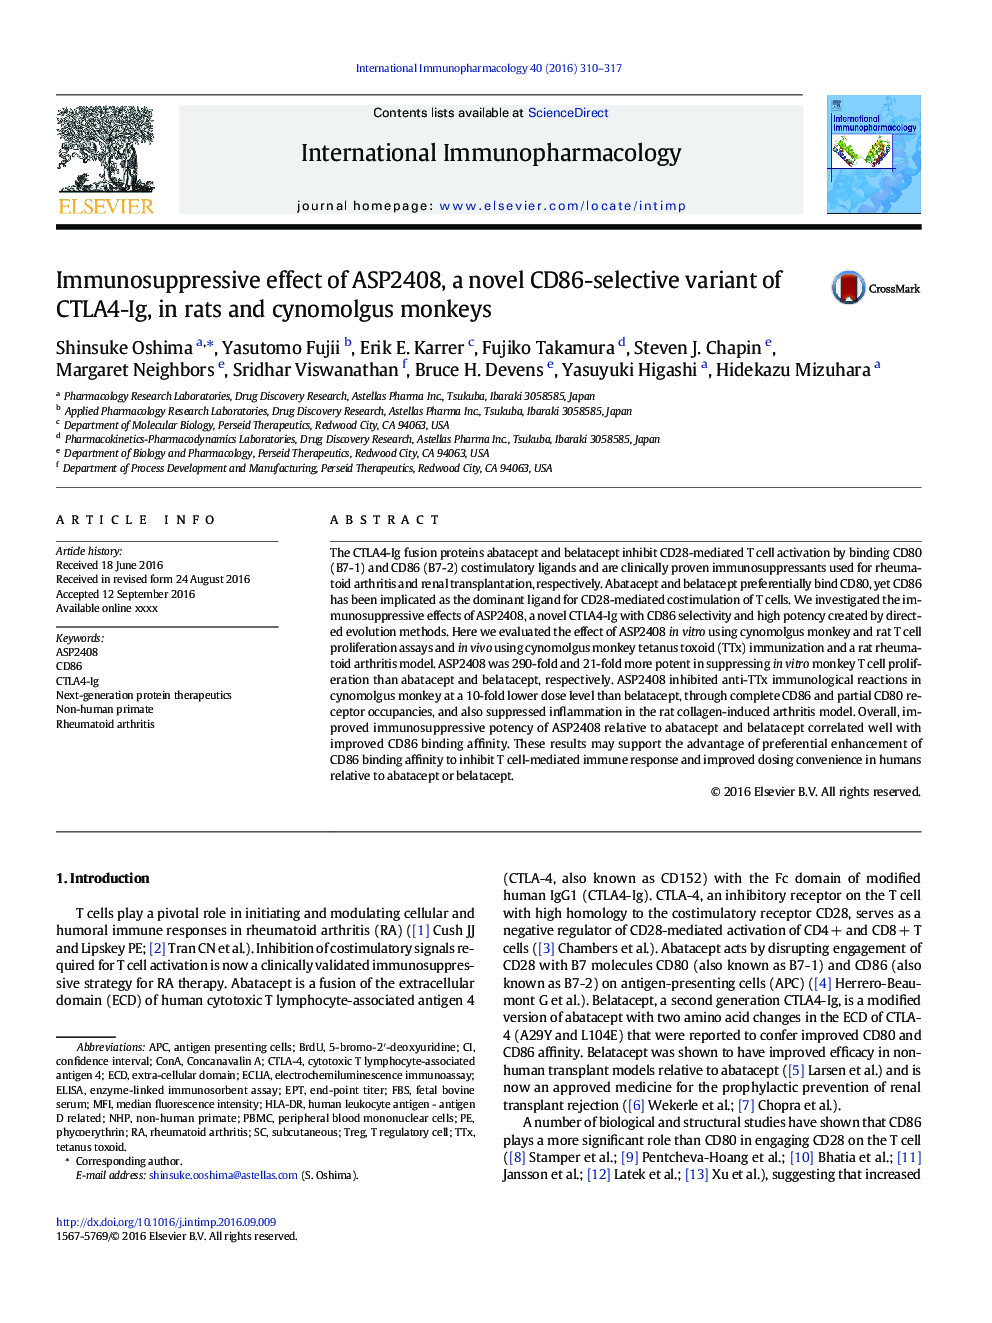 Immunosuppressive effect of ASP2408, a novel CD86-selective variant of CTLA4-Ig, in rats and cynomolgus monkeys